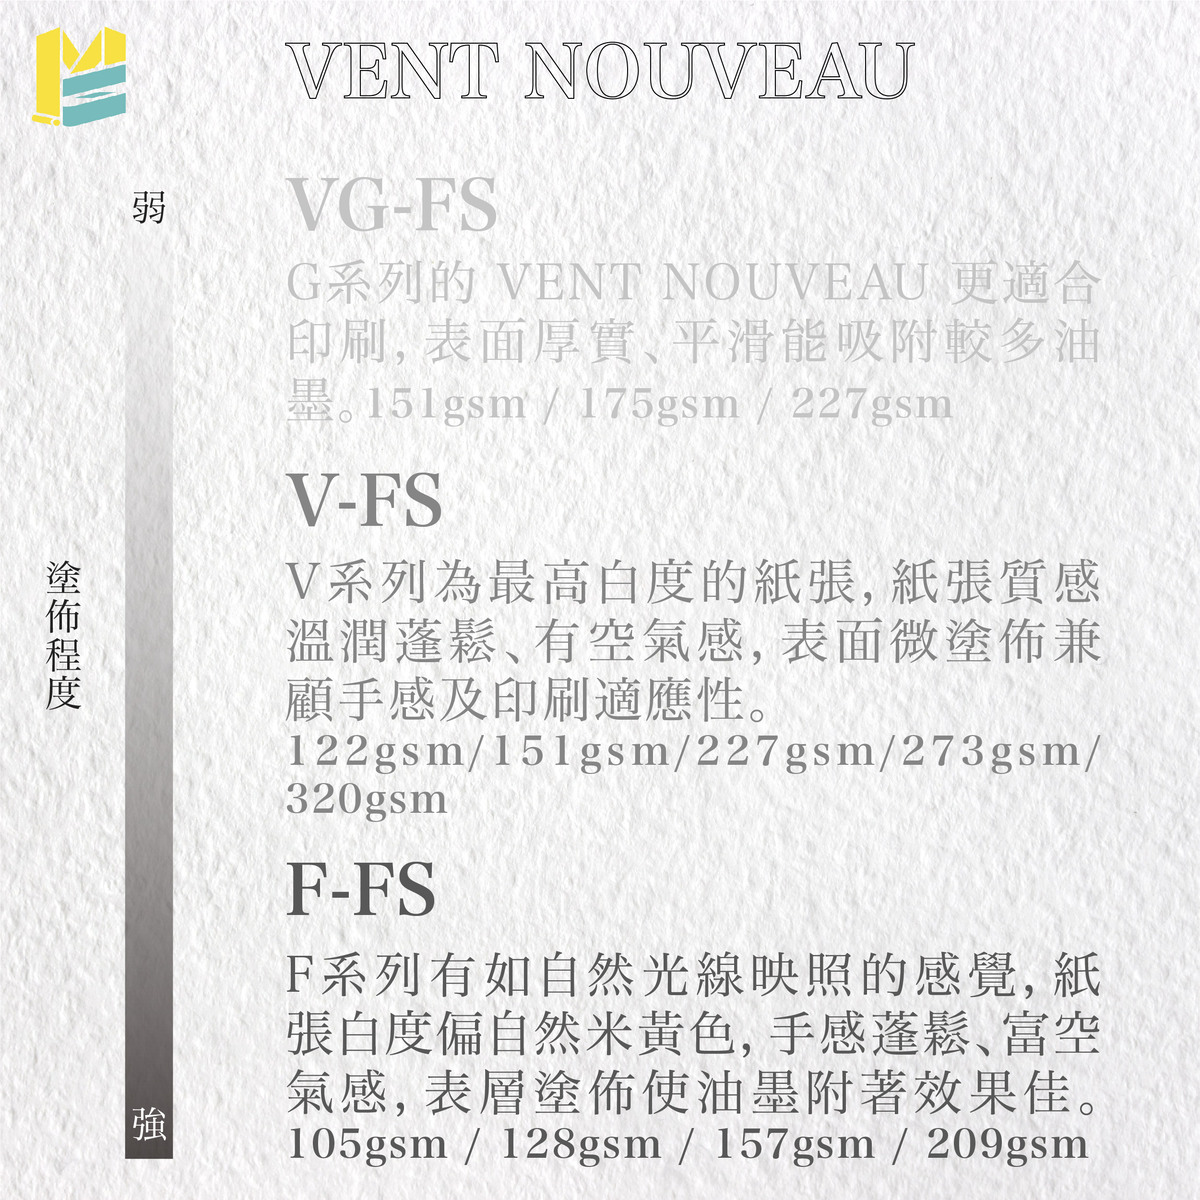 紙張命名對照－VENT NOUVEAU VG-FS / V-FS / F-FS